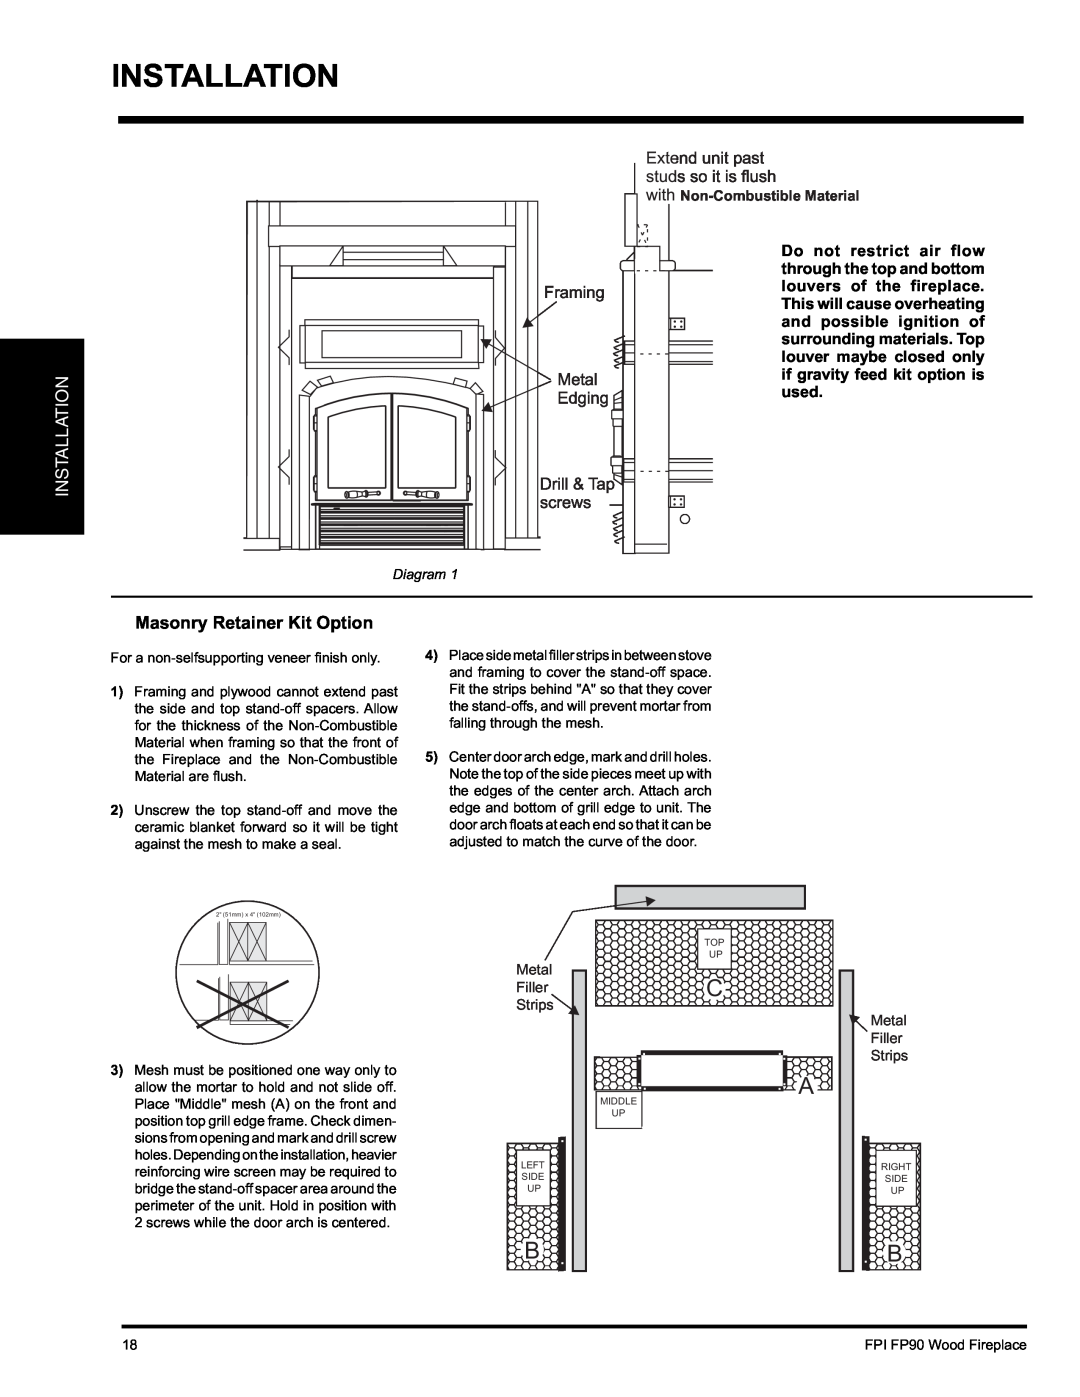 Regency FP90 installation manual Installation, Masonry Retainer Kit Option, Non-CombustibleMaterial 